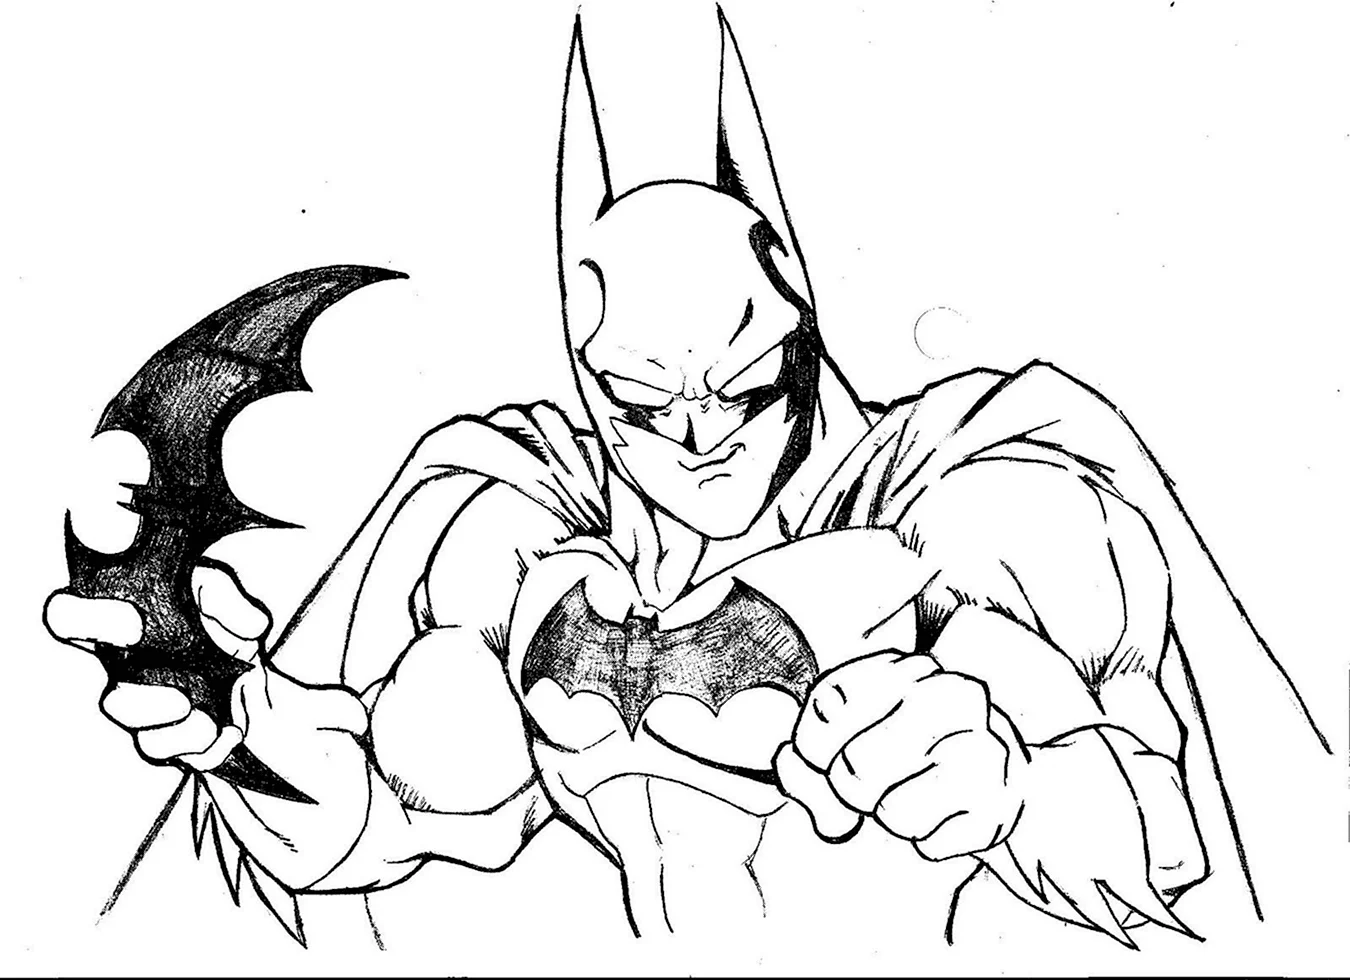 Бэтмен рисунок. Для срисовки